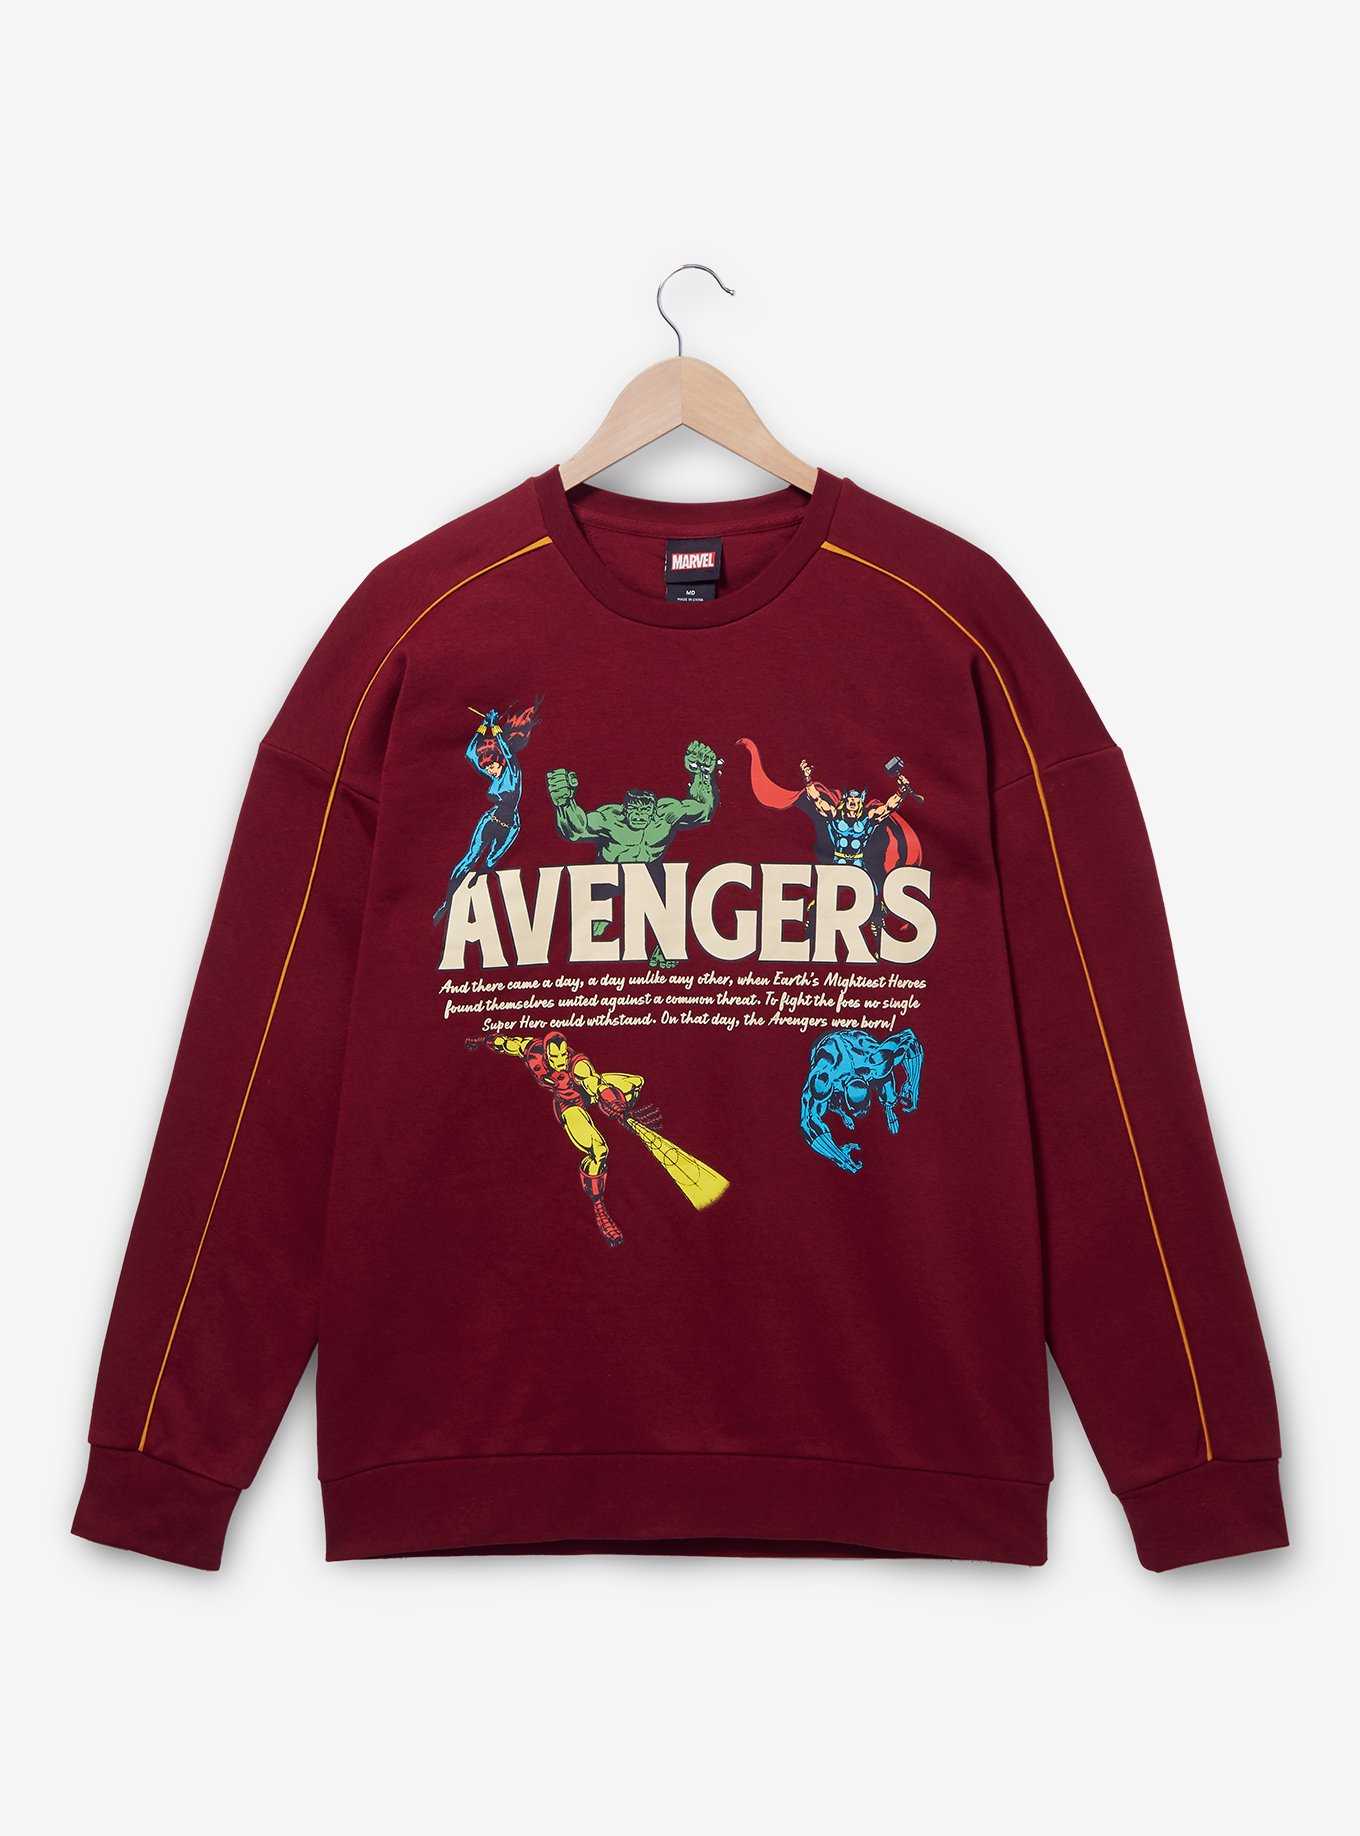 OFFICIAL Avengers Shirts & Merchandise Her Universe 